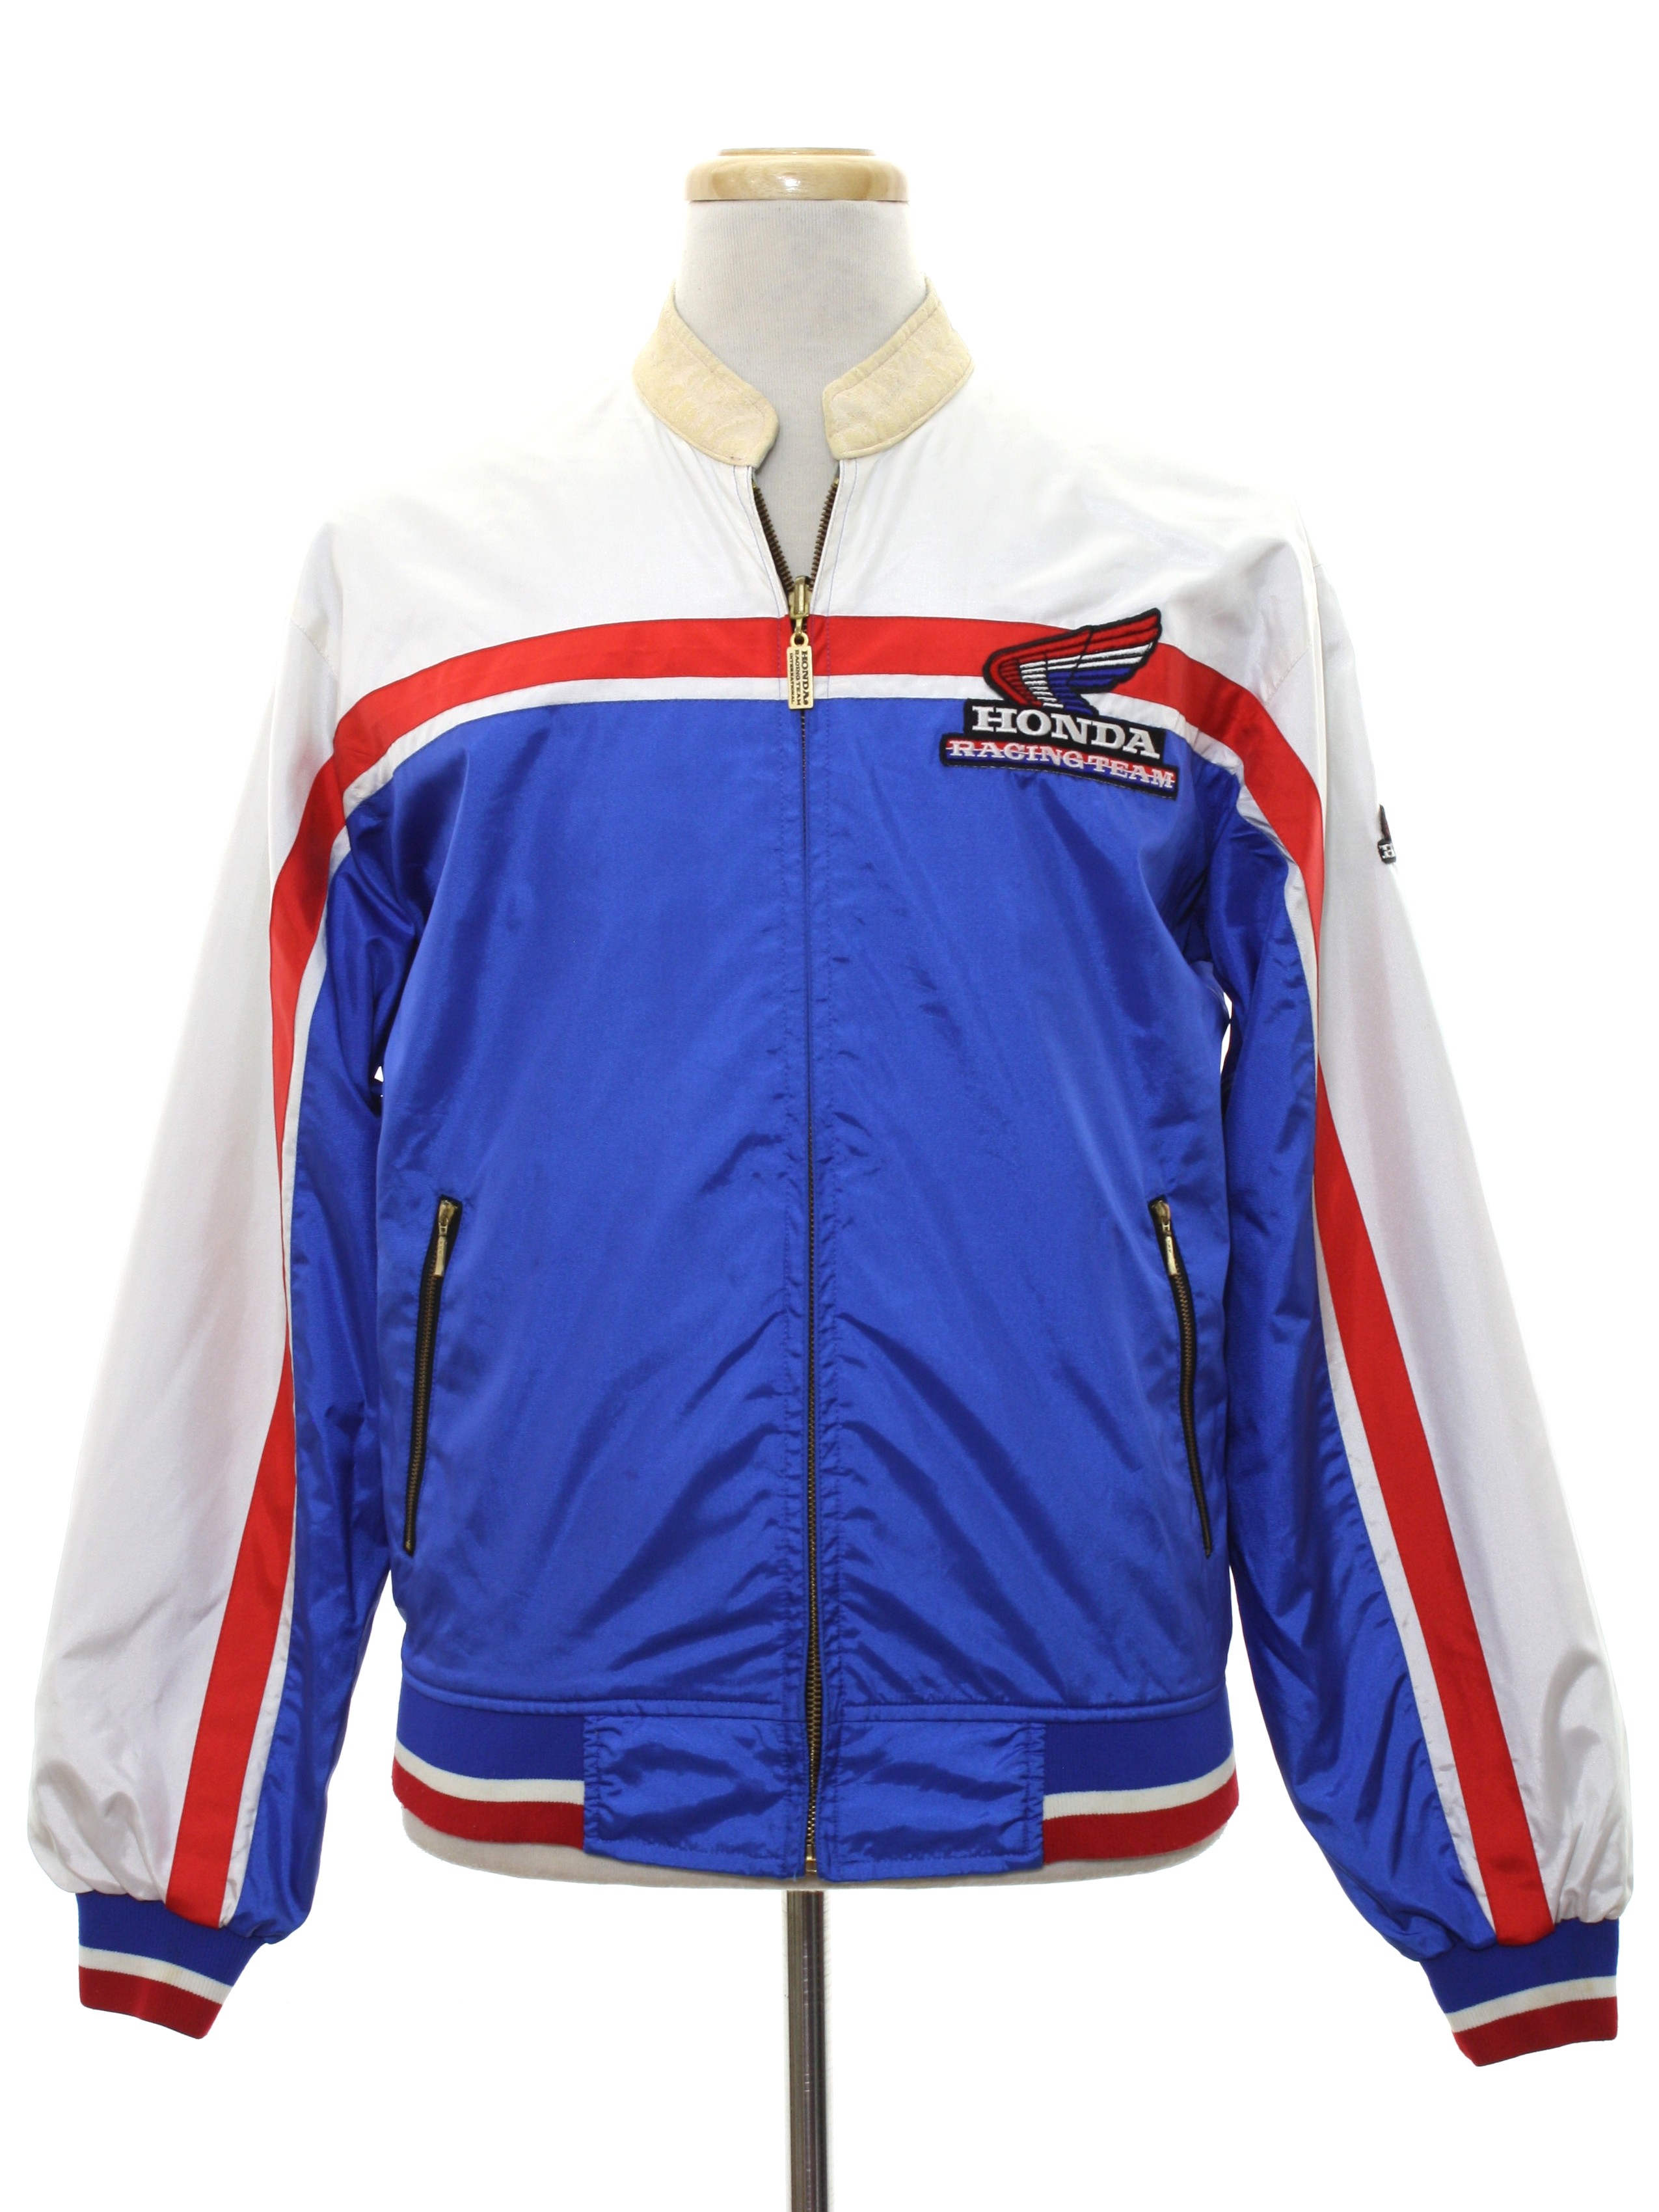 Vintage 80s Jacket: 80s -Honda Racing Team- Mens white and royal